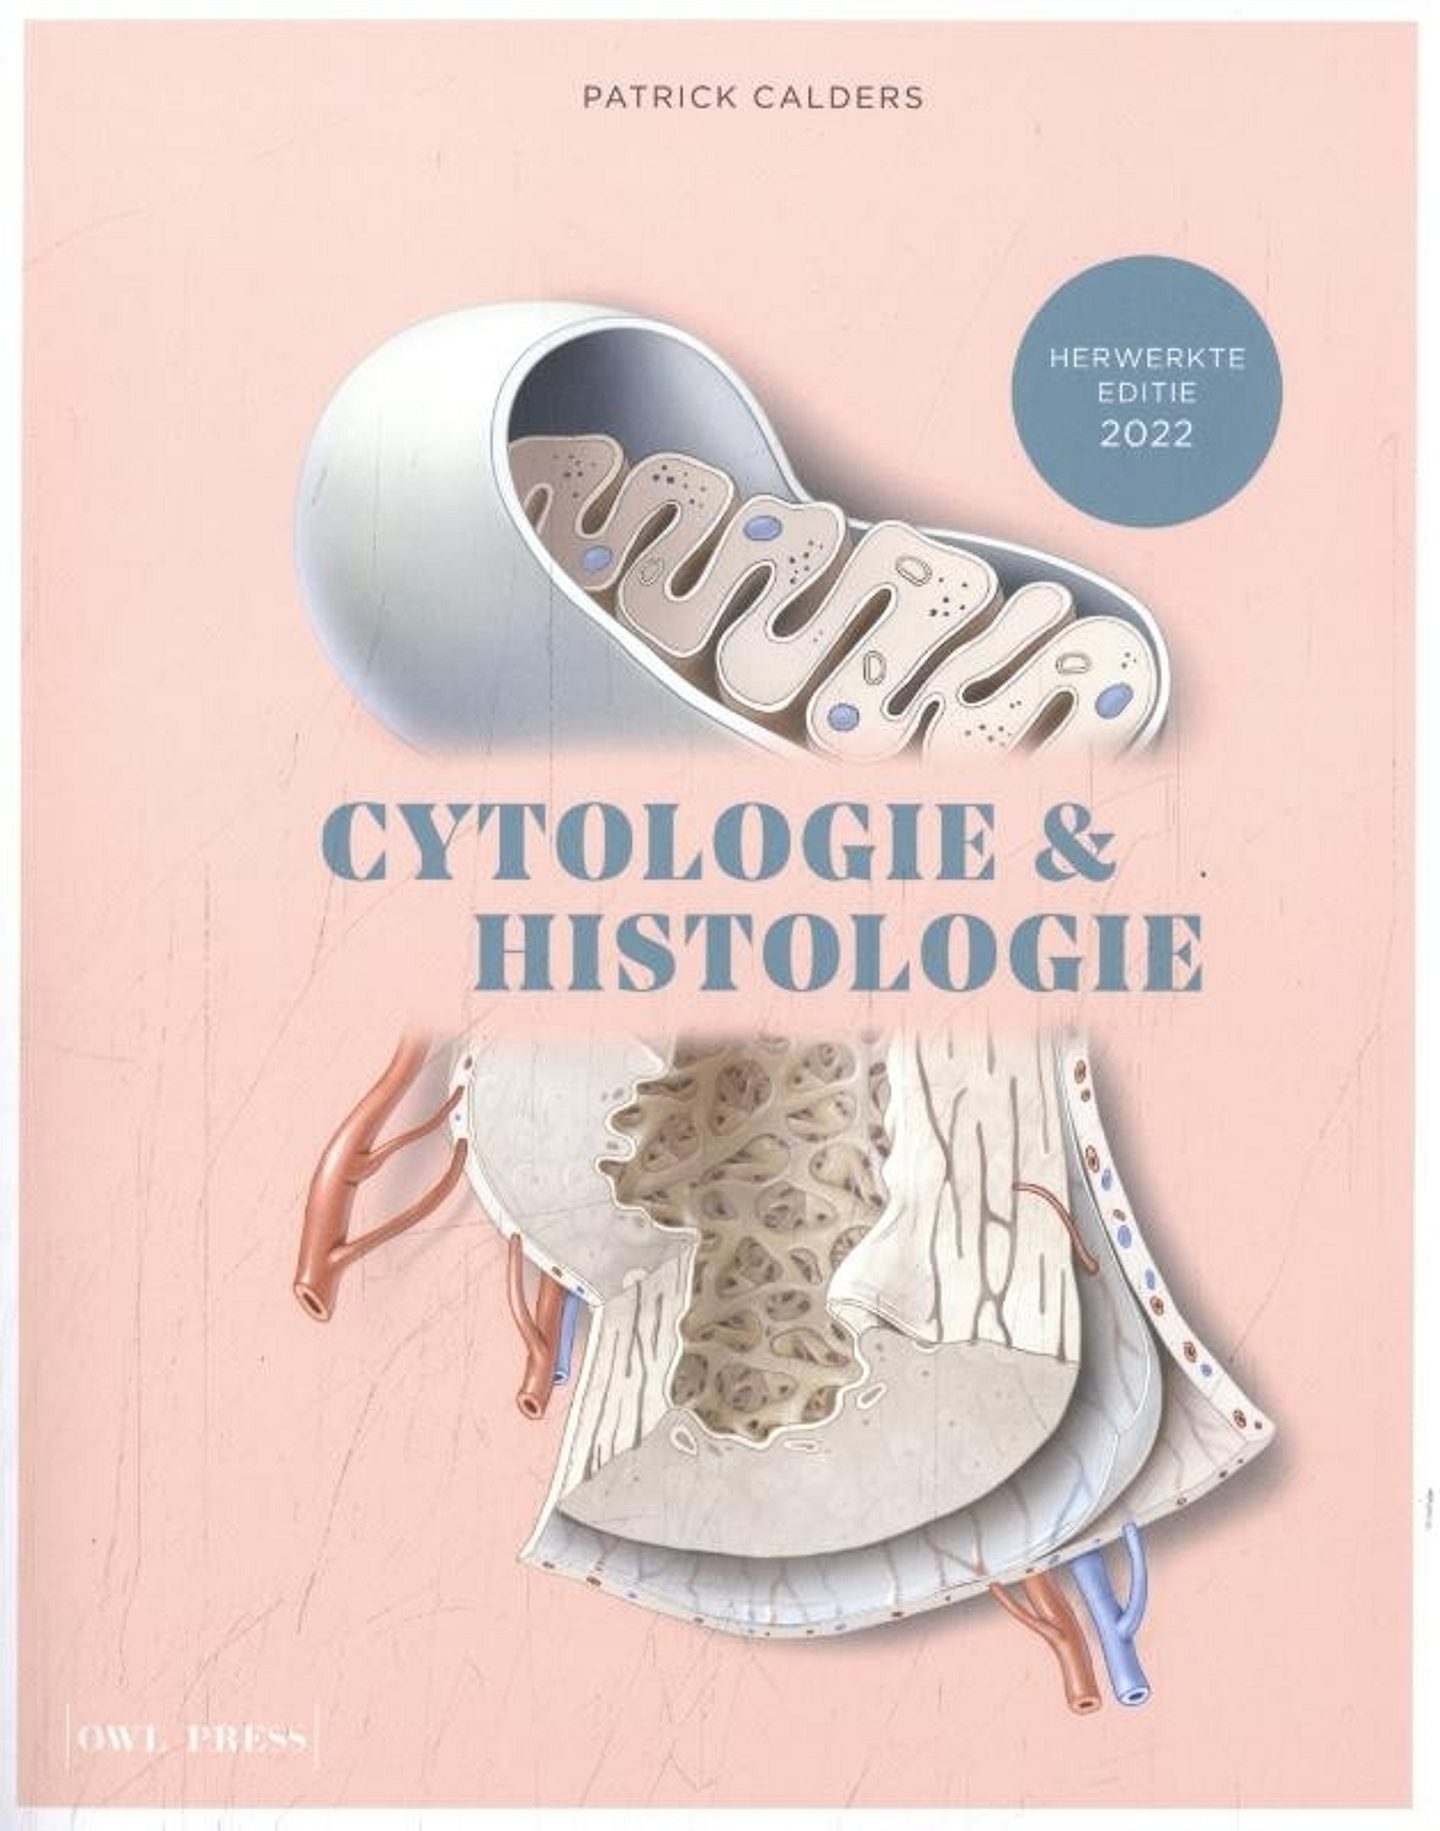 Cytologie en histologie